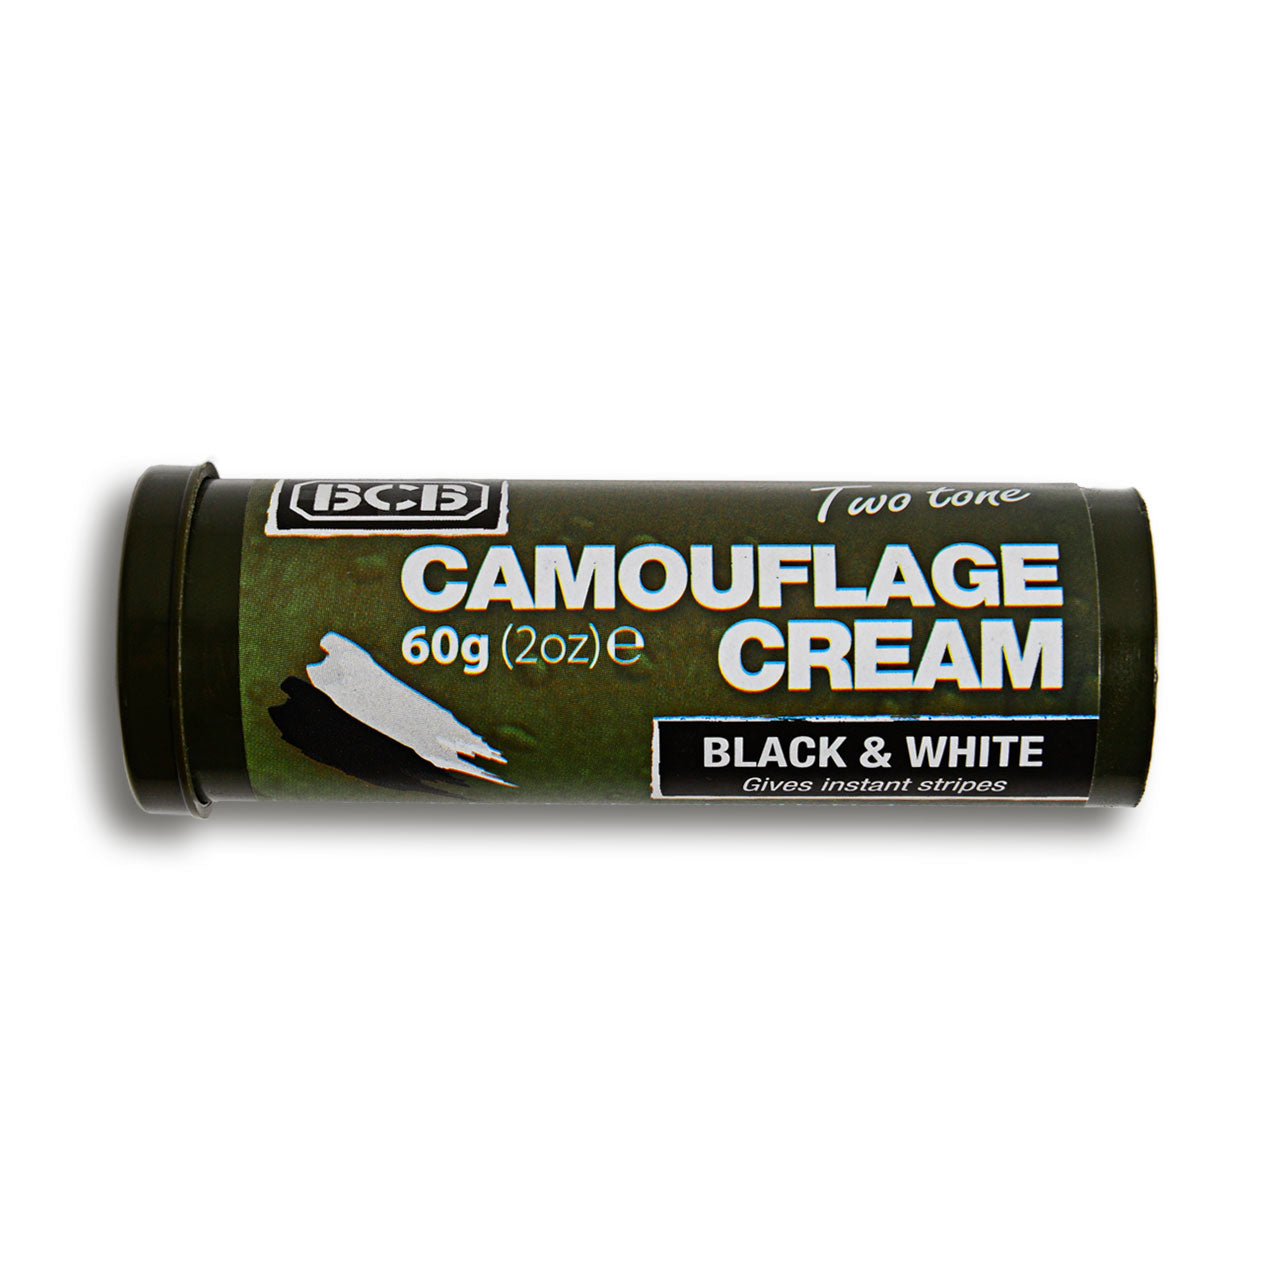 Military Camo Cream